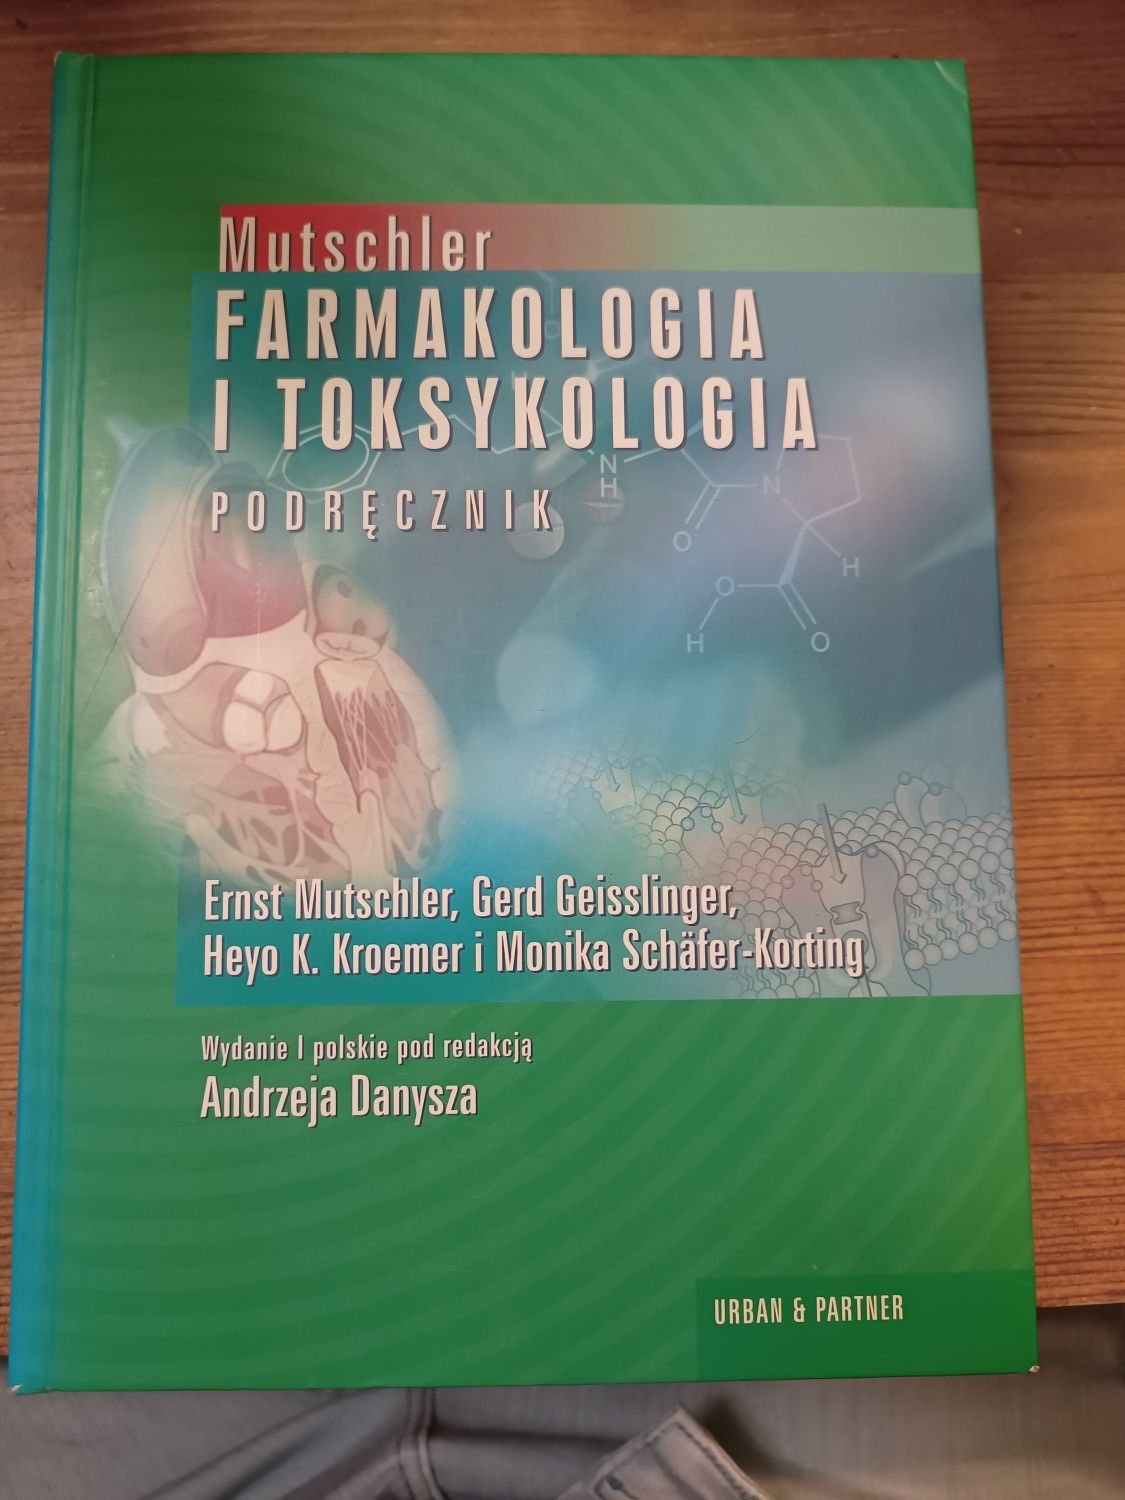 Mutschler Farmakologia i toksykologia

Podręcznik

Ernst Mutschler

Ge